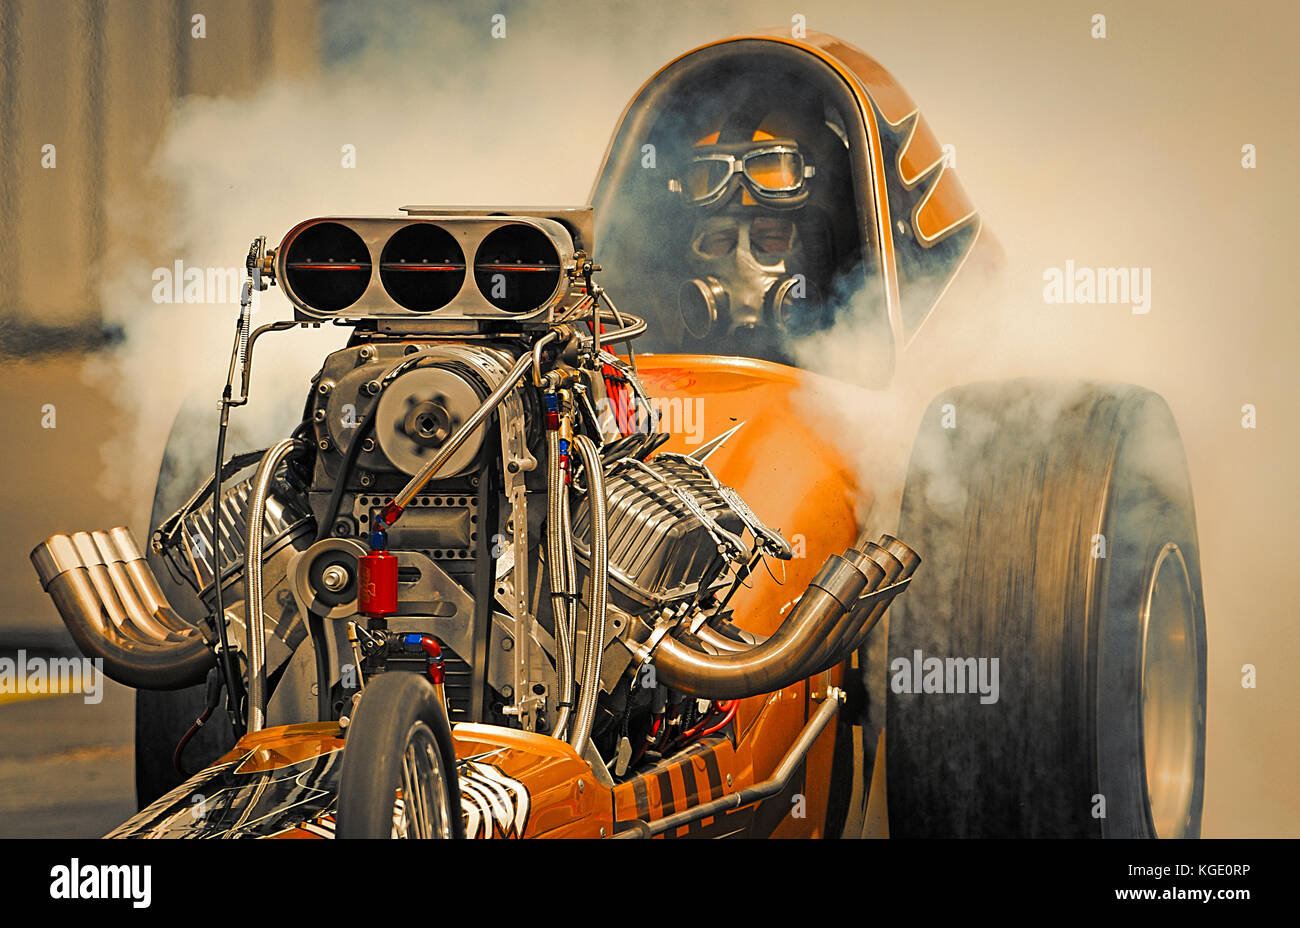 Jon Webster esegue un burnout nel suo slingshot dragster a Santa Pod Raceway Foto Stock